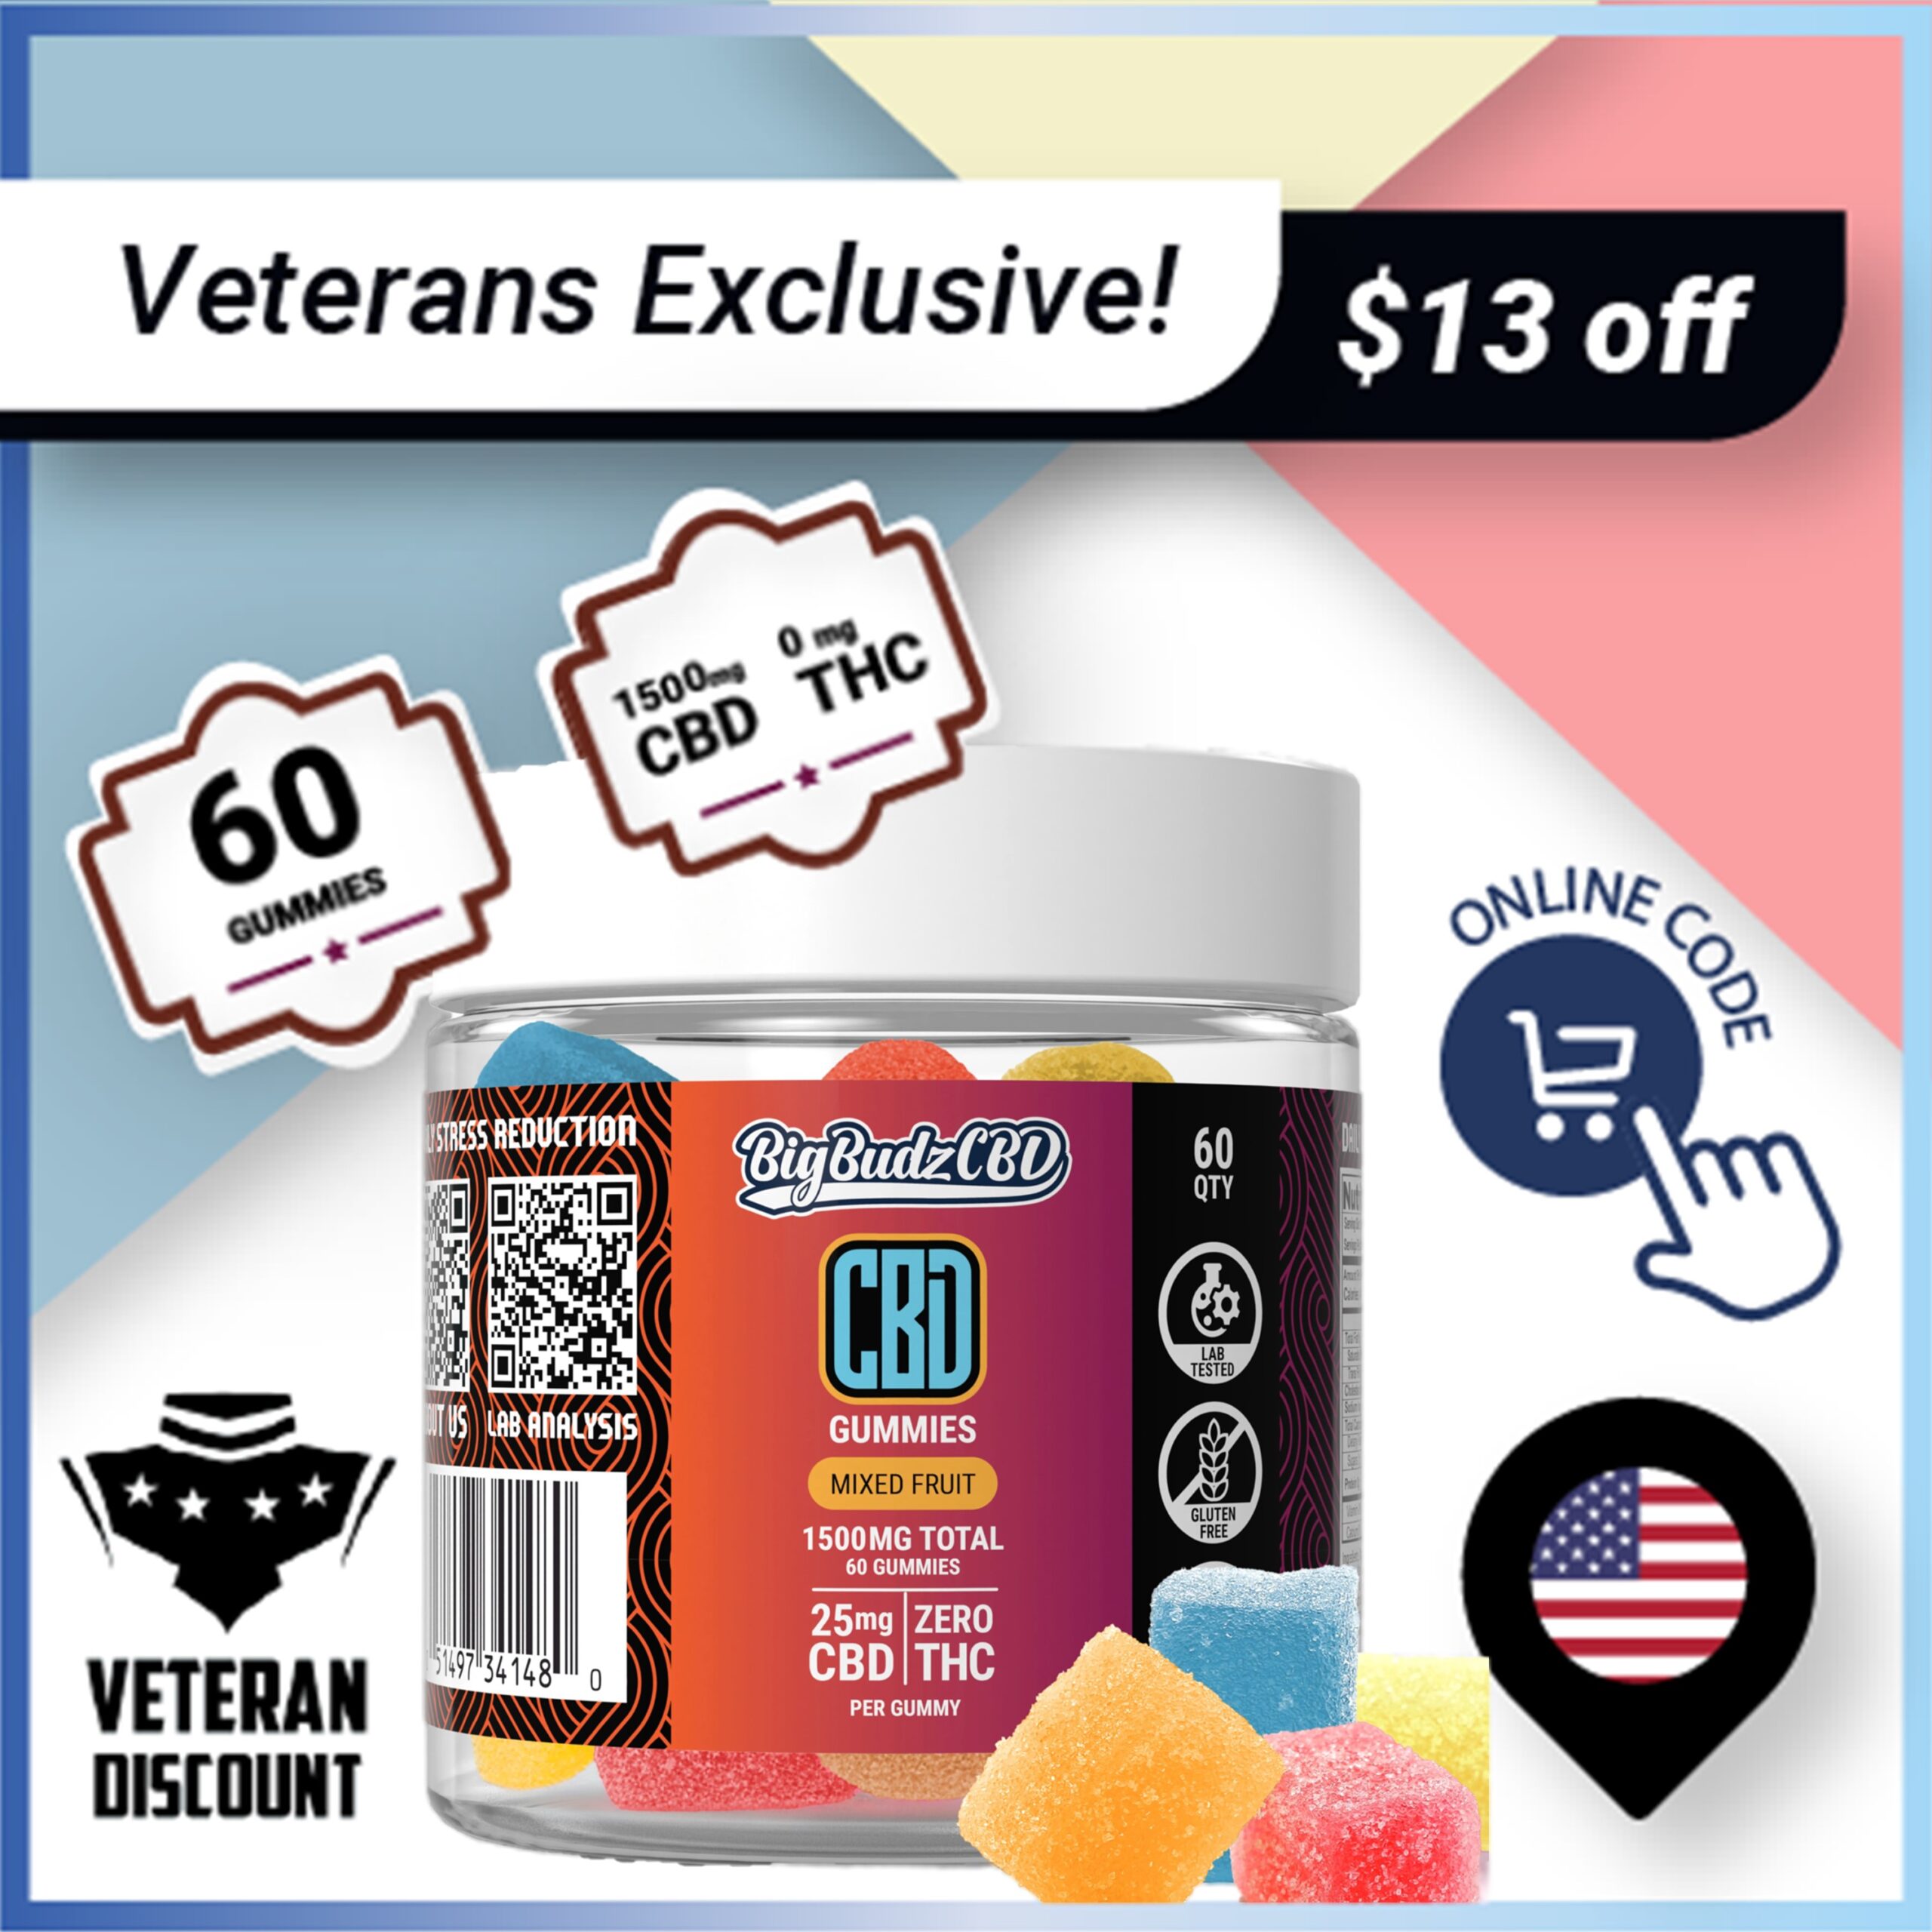 (veteran discount coupon) 60 count BSO gummies $13 off